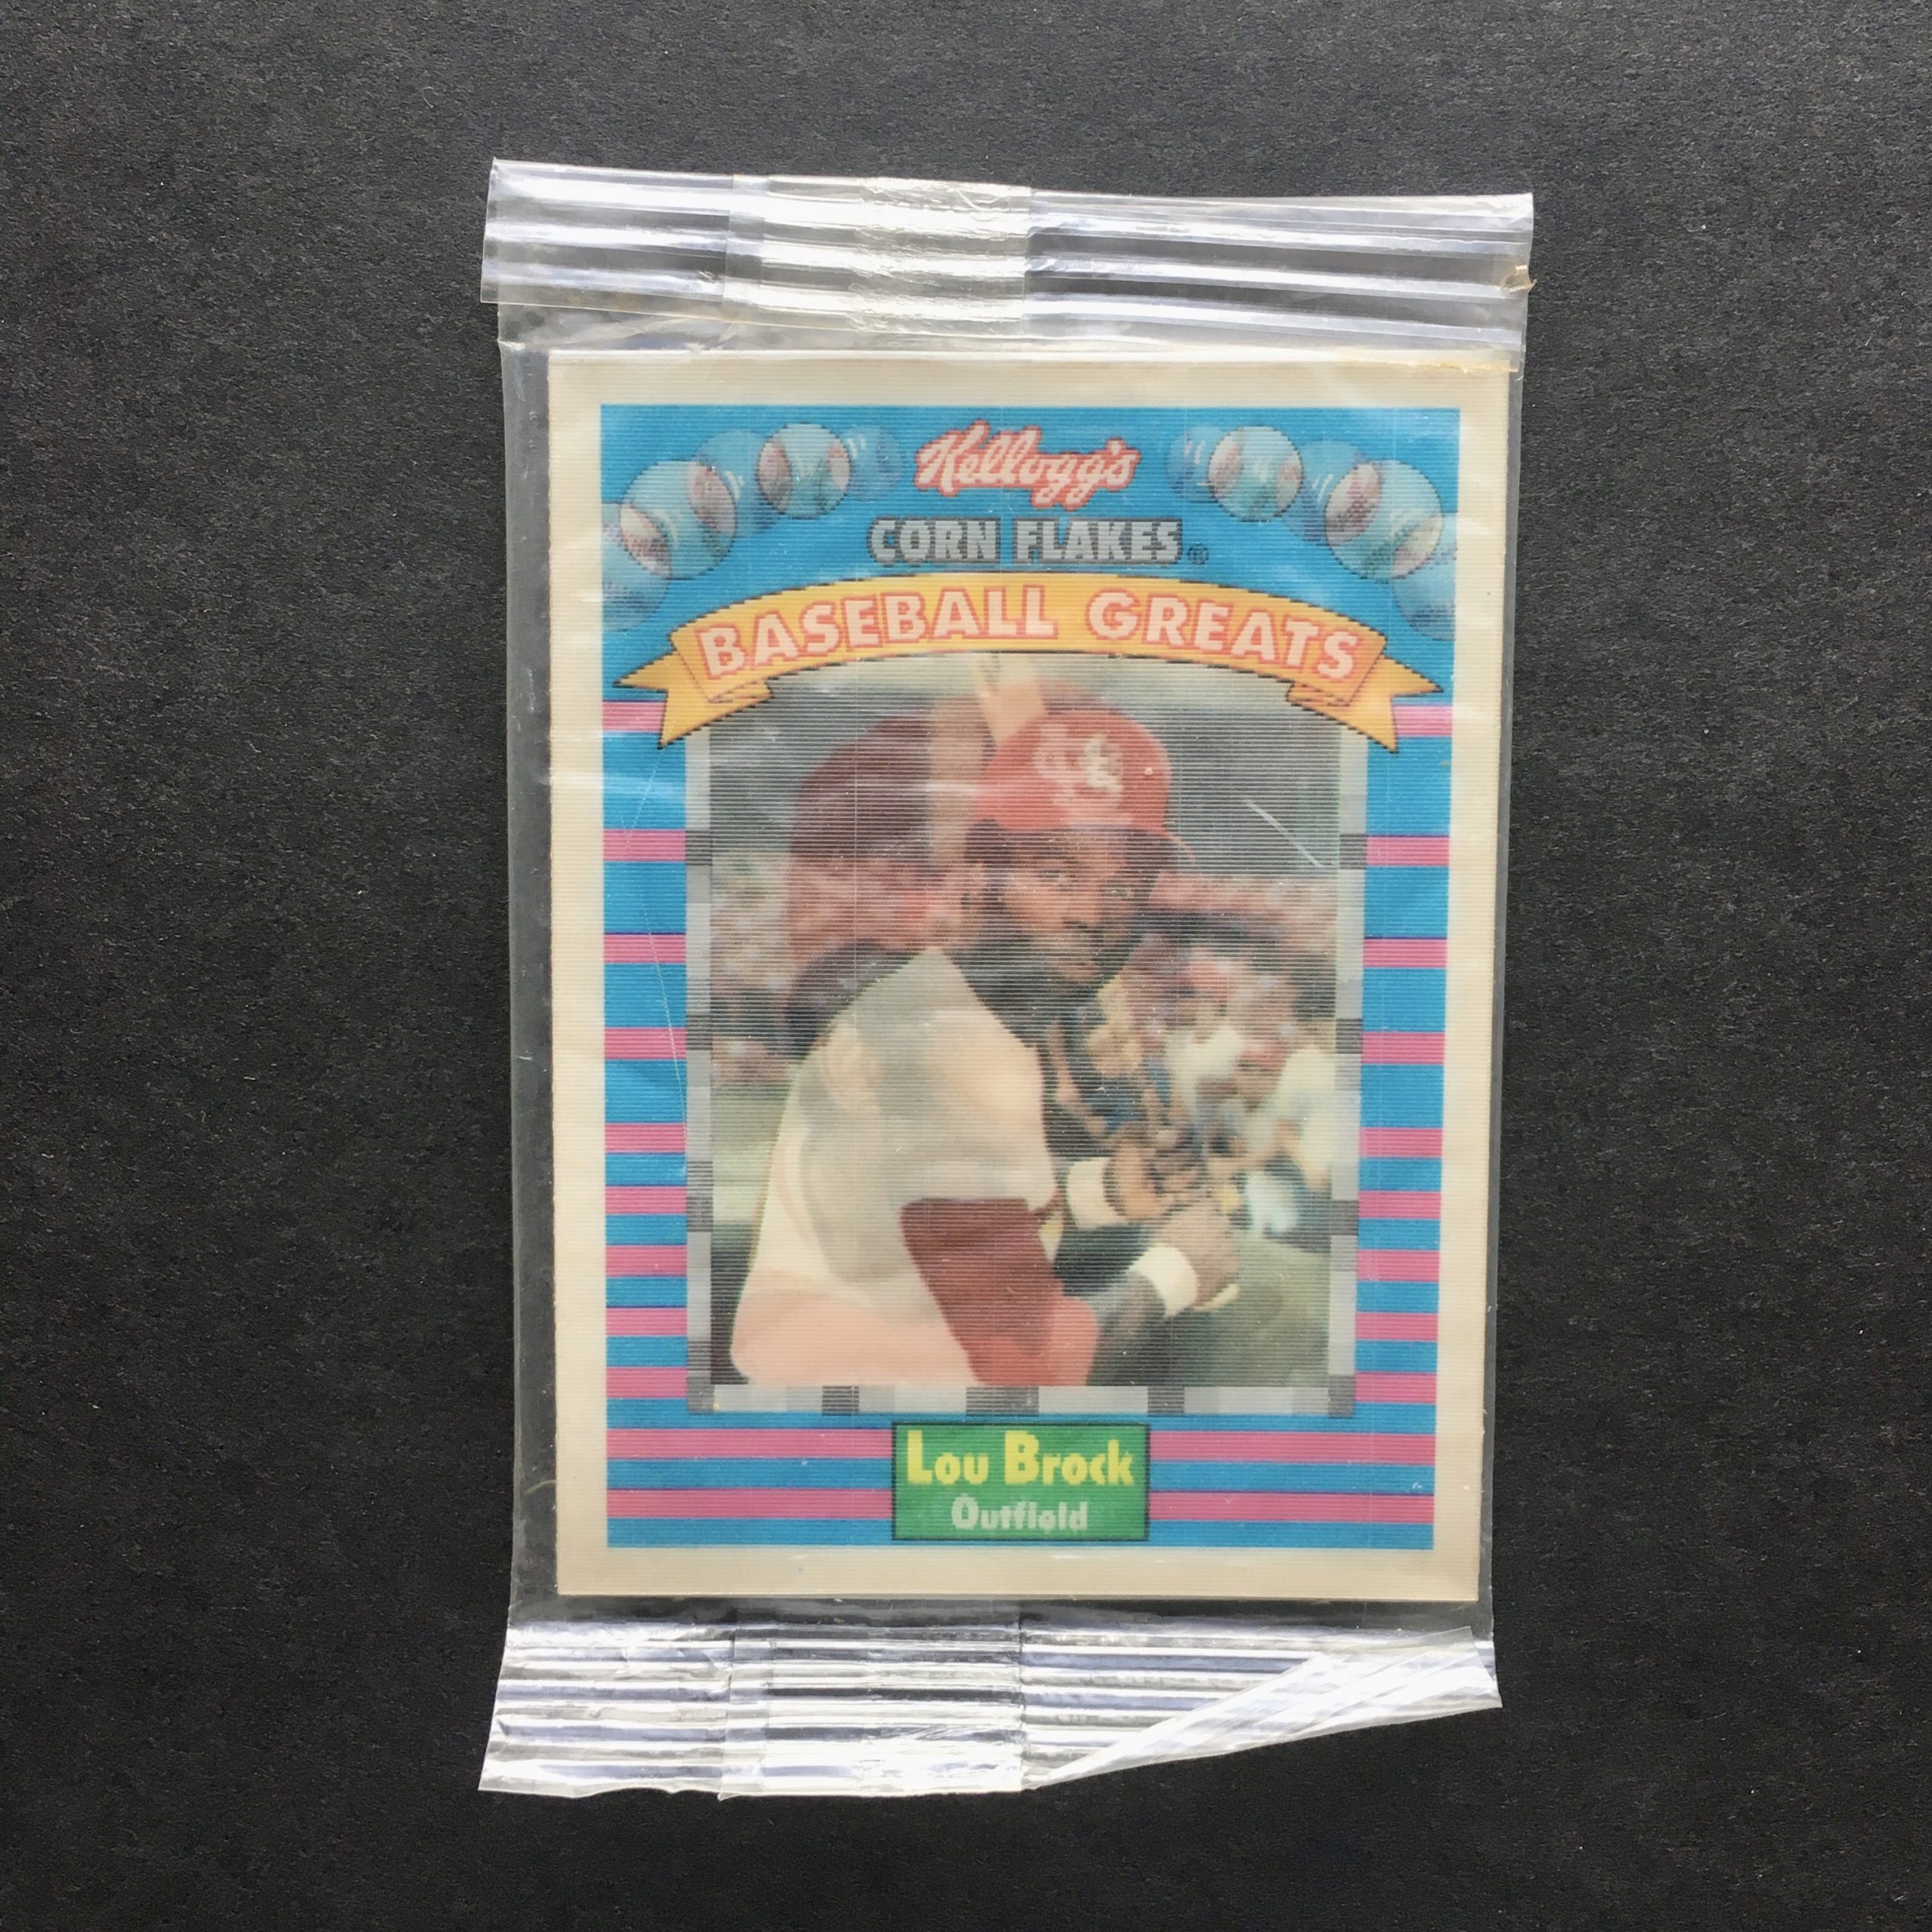 Lou Brock 1991 Kellogg's Corn Flakes Baseball Greats Card